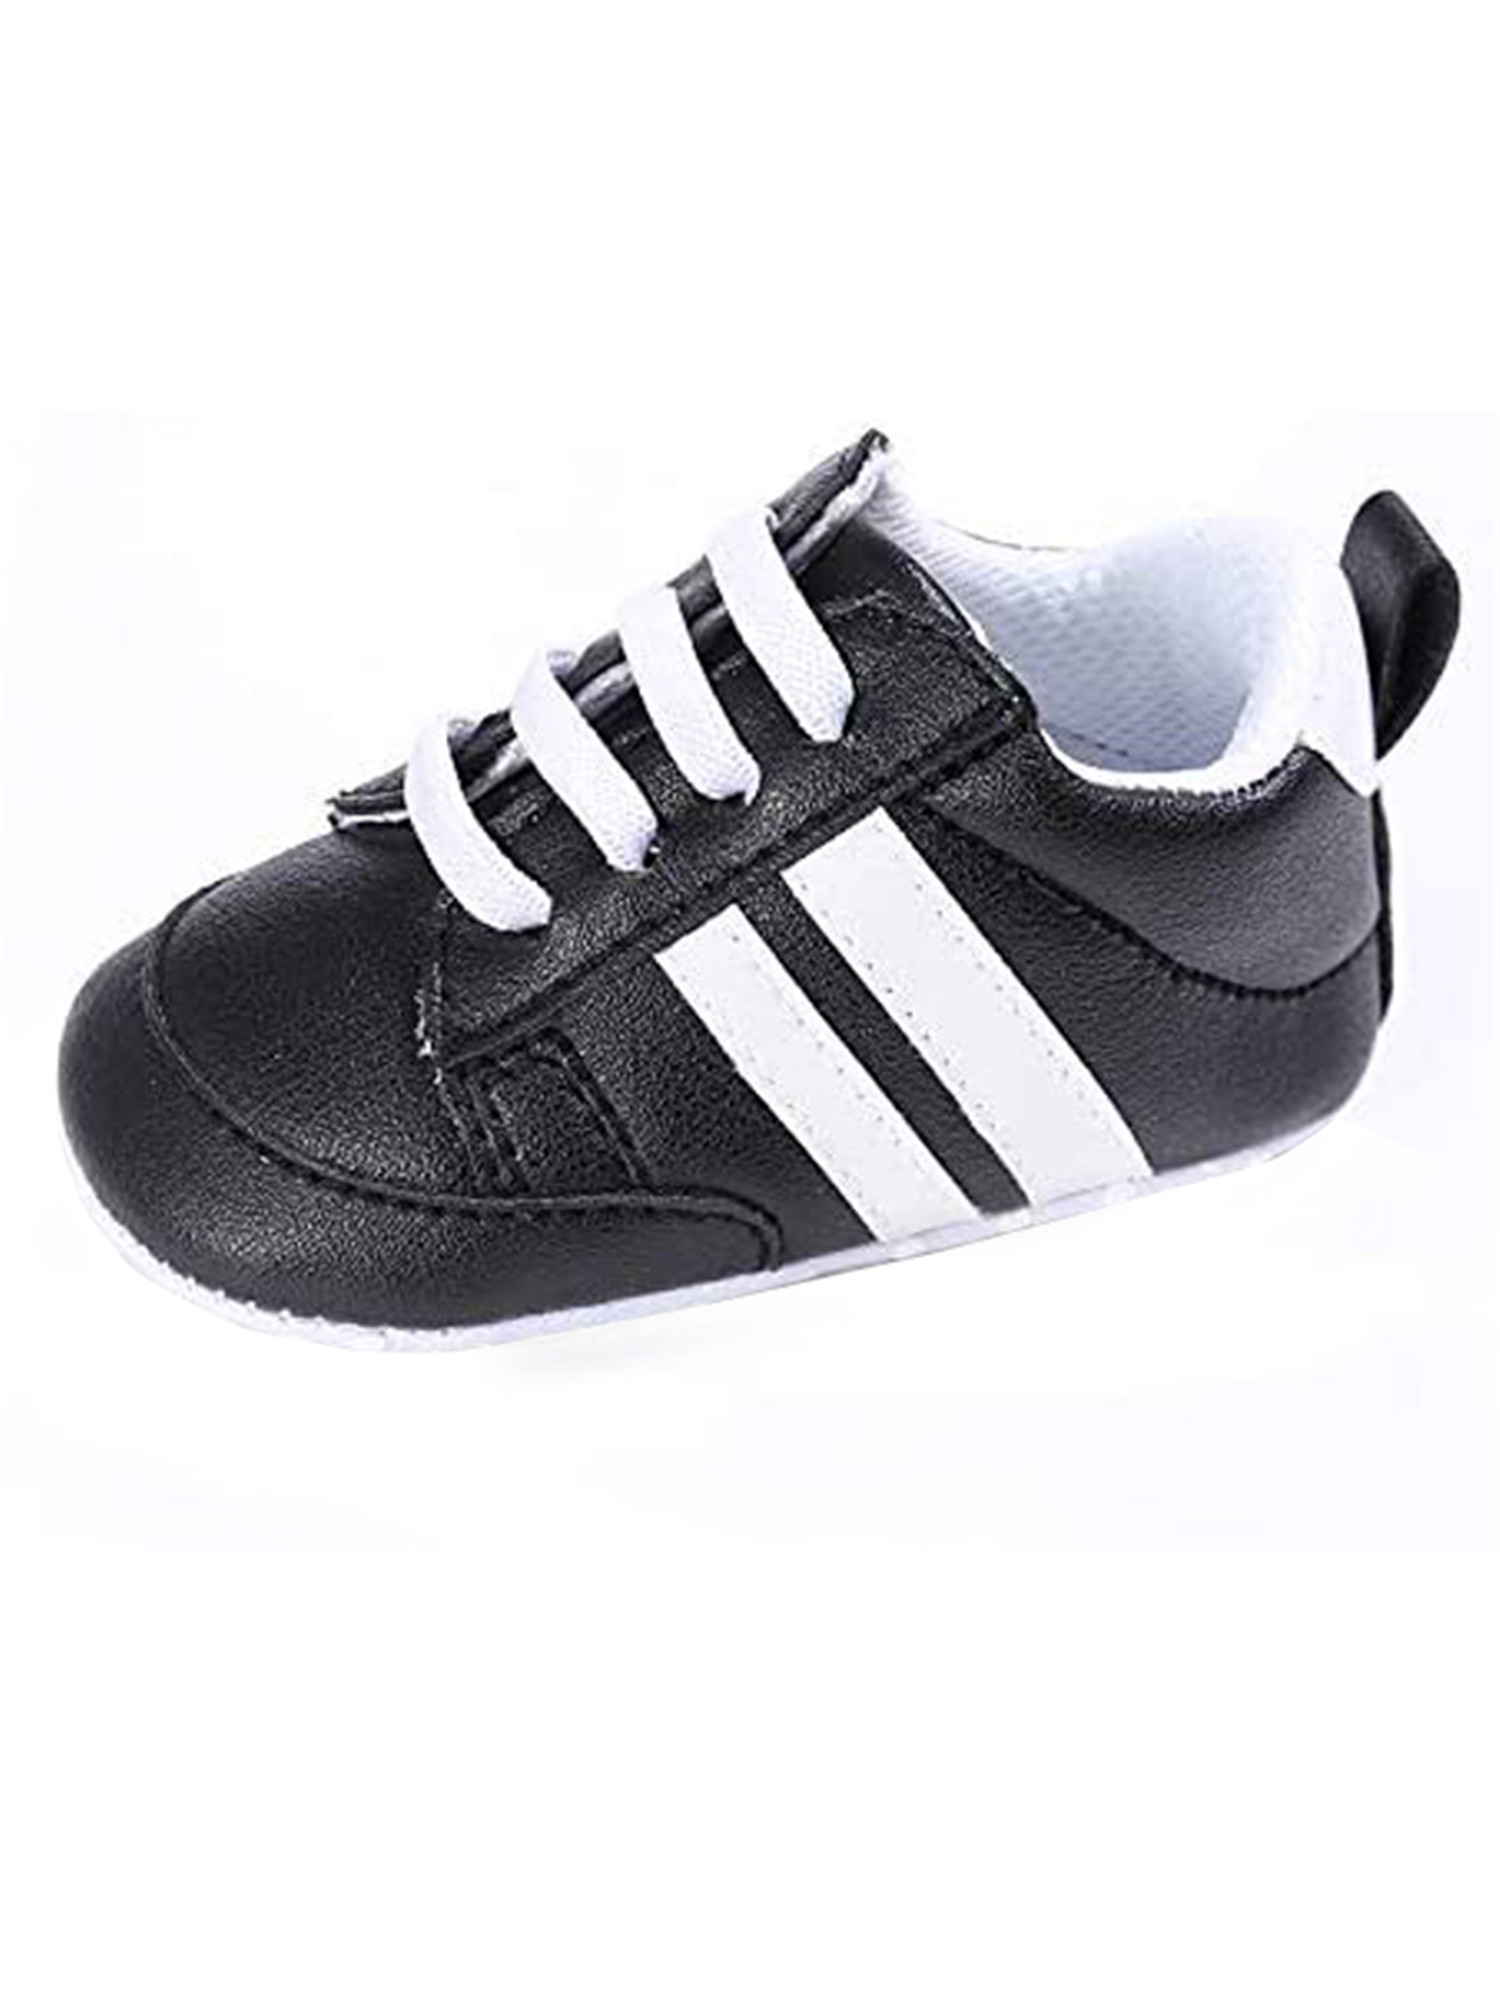 Baby Boys Premium Soft Sole Infant Prewalker Toddler Sneaker Shoes